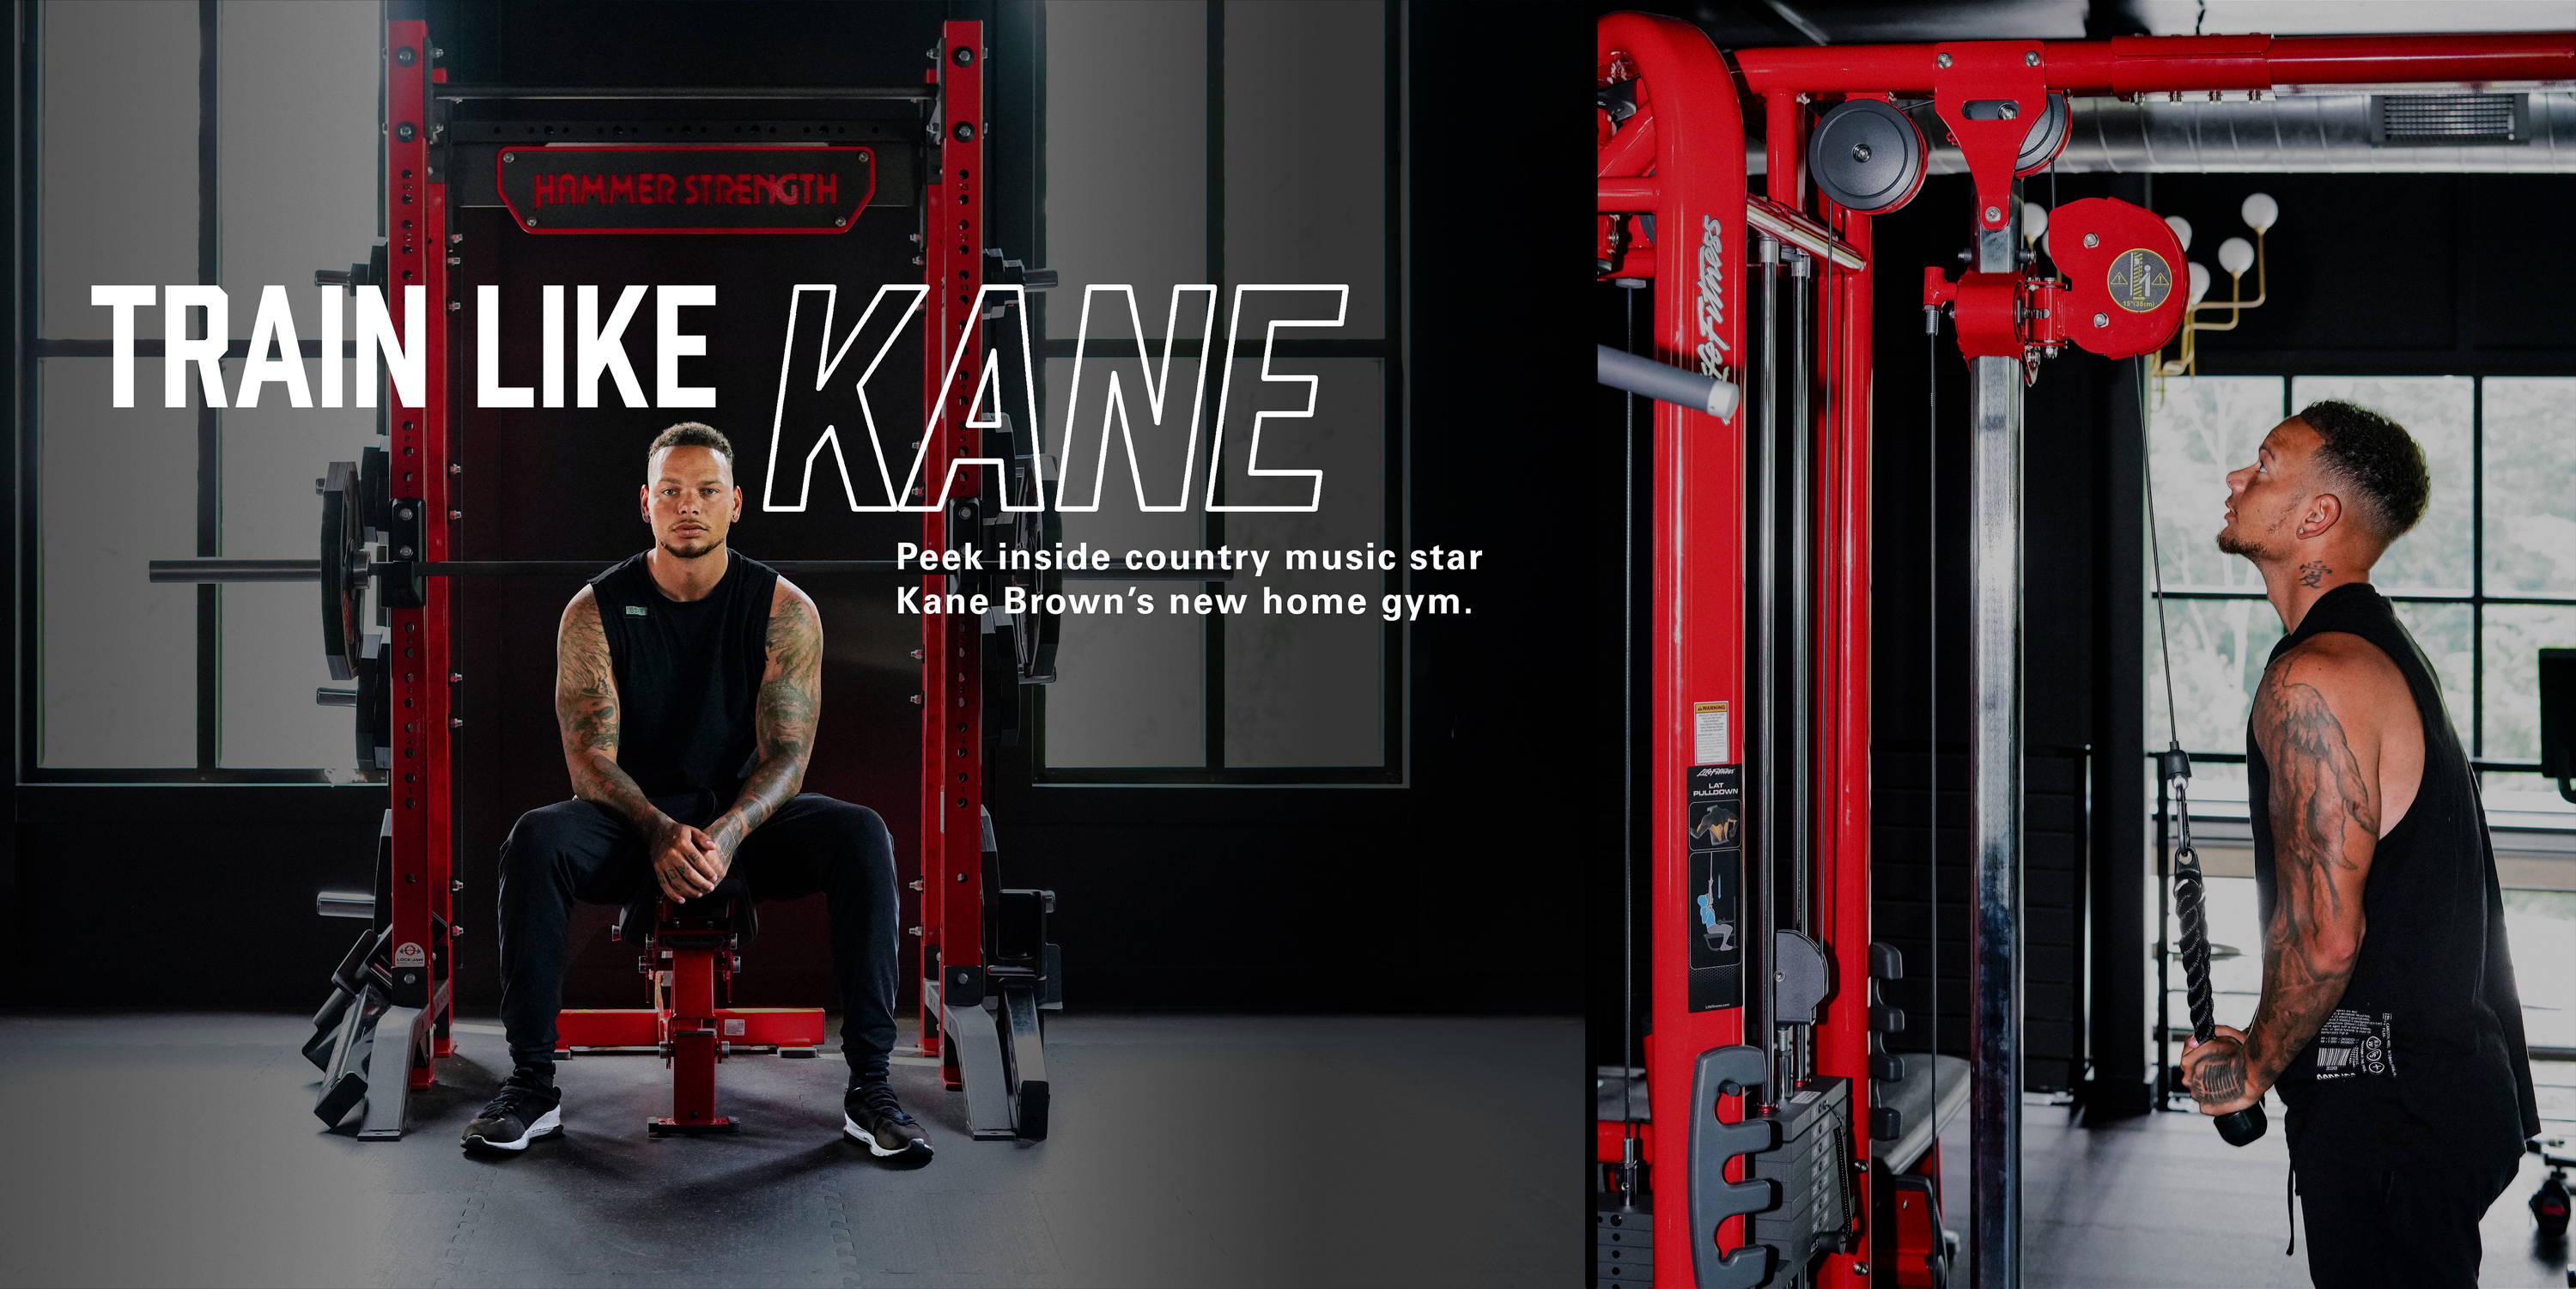 Train Like Kane Brown - Check out his new home gym